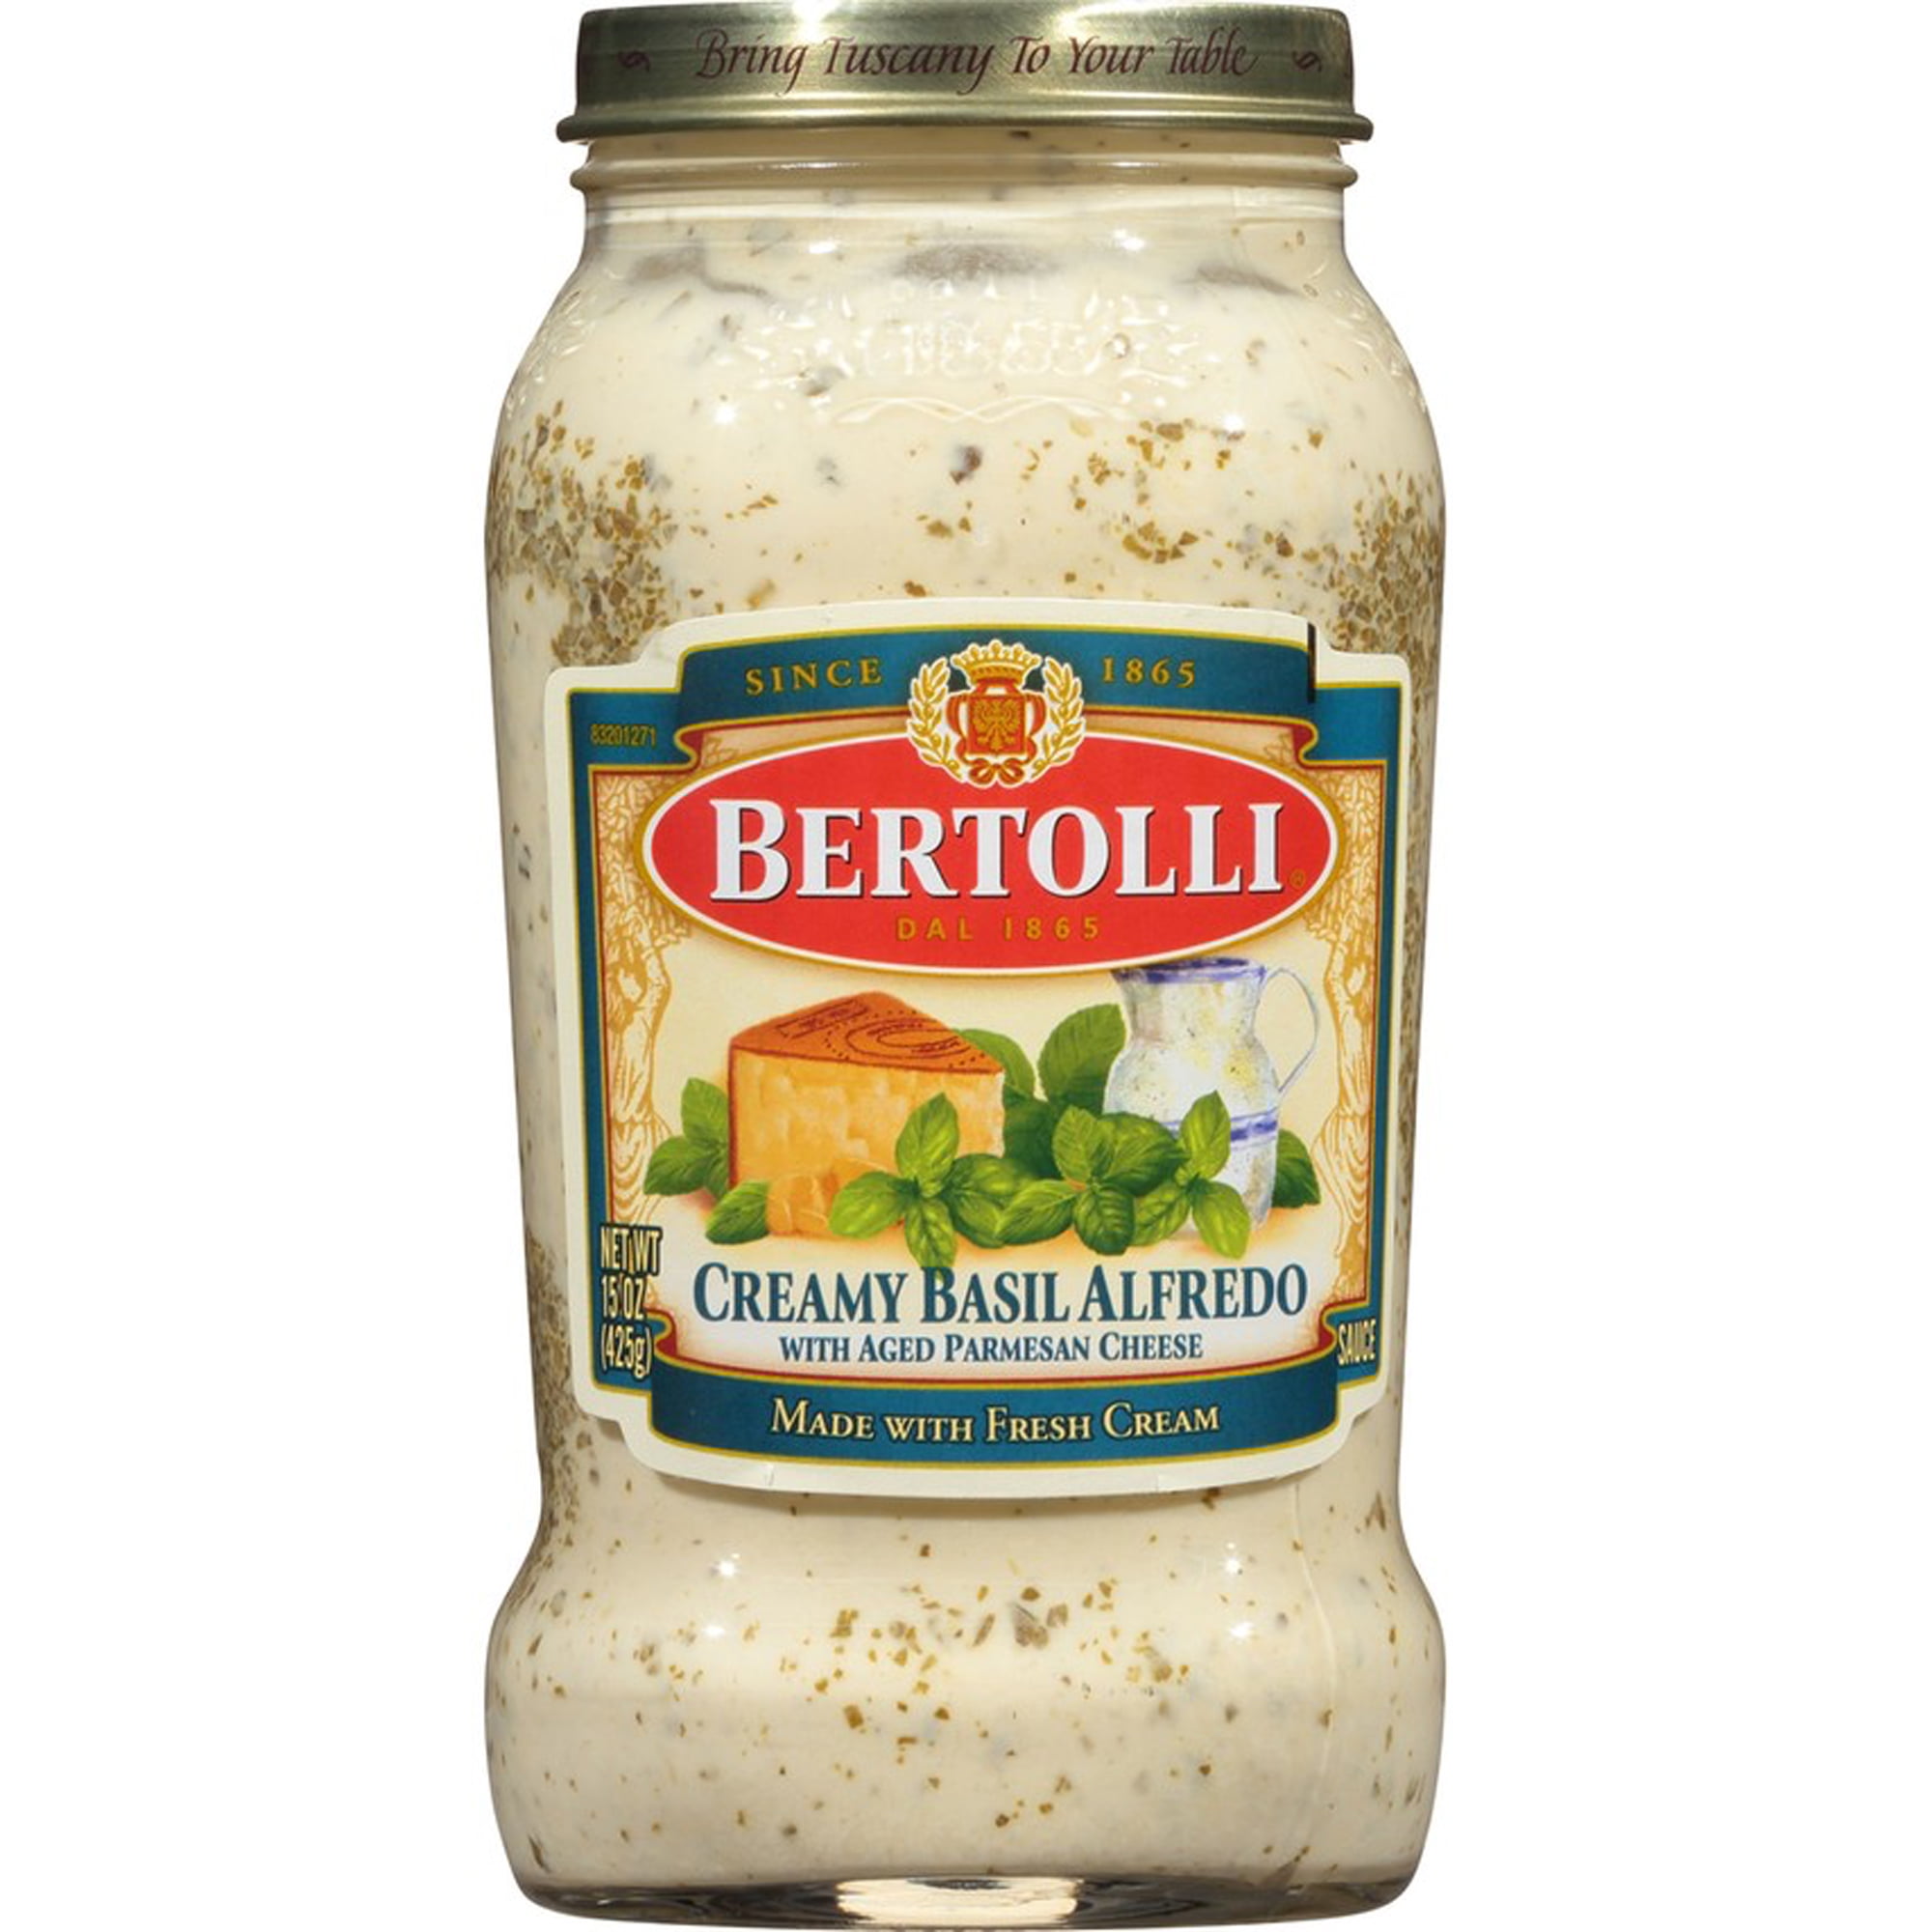 Bertolli Creamy Basil Alfredo Sauce, 15 oz. - Walmart.com - Walmart.com